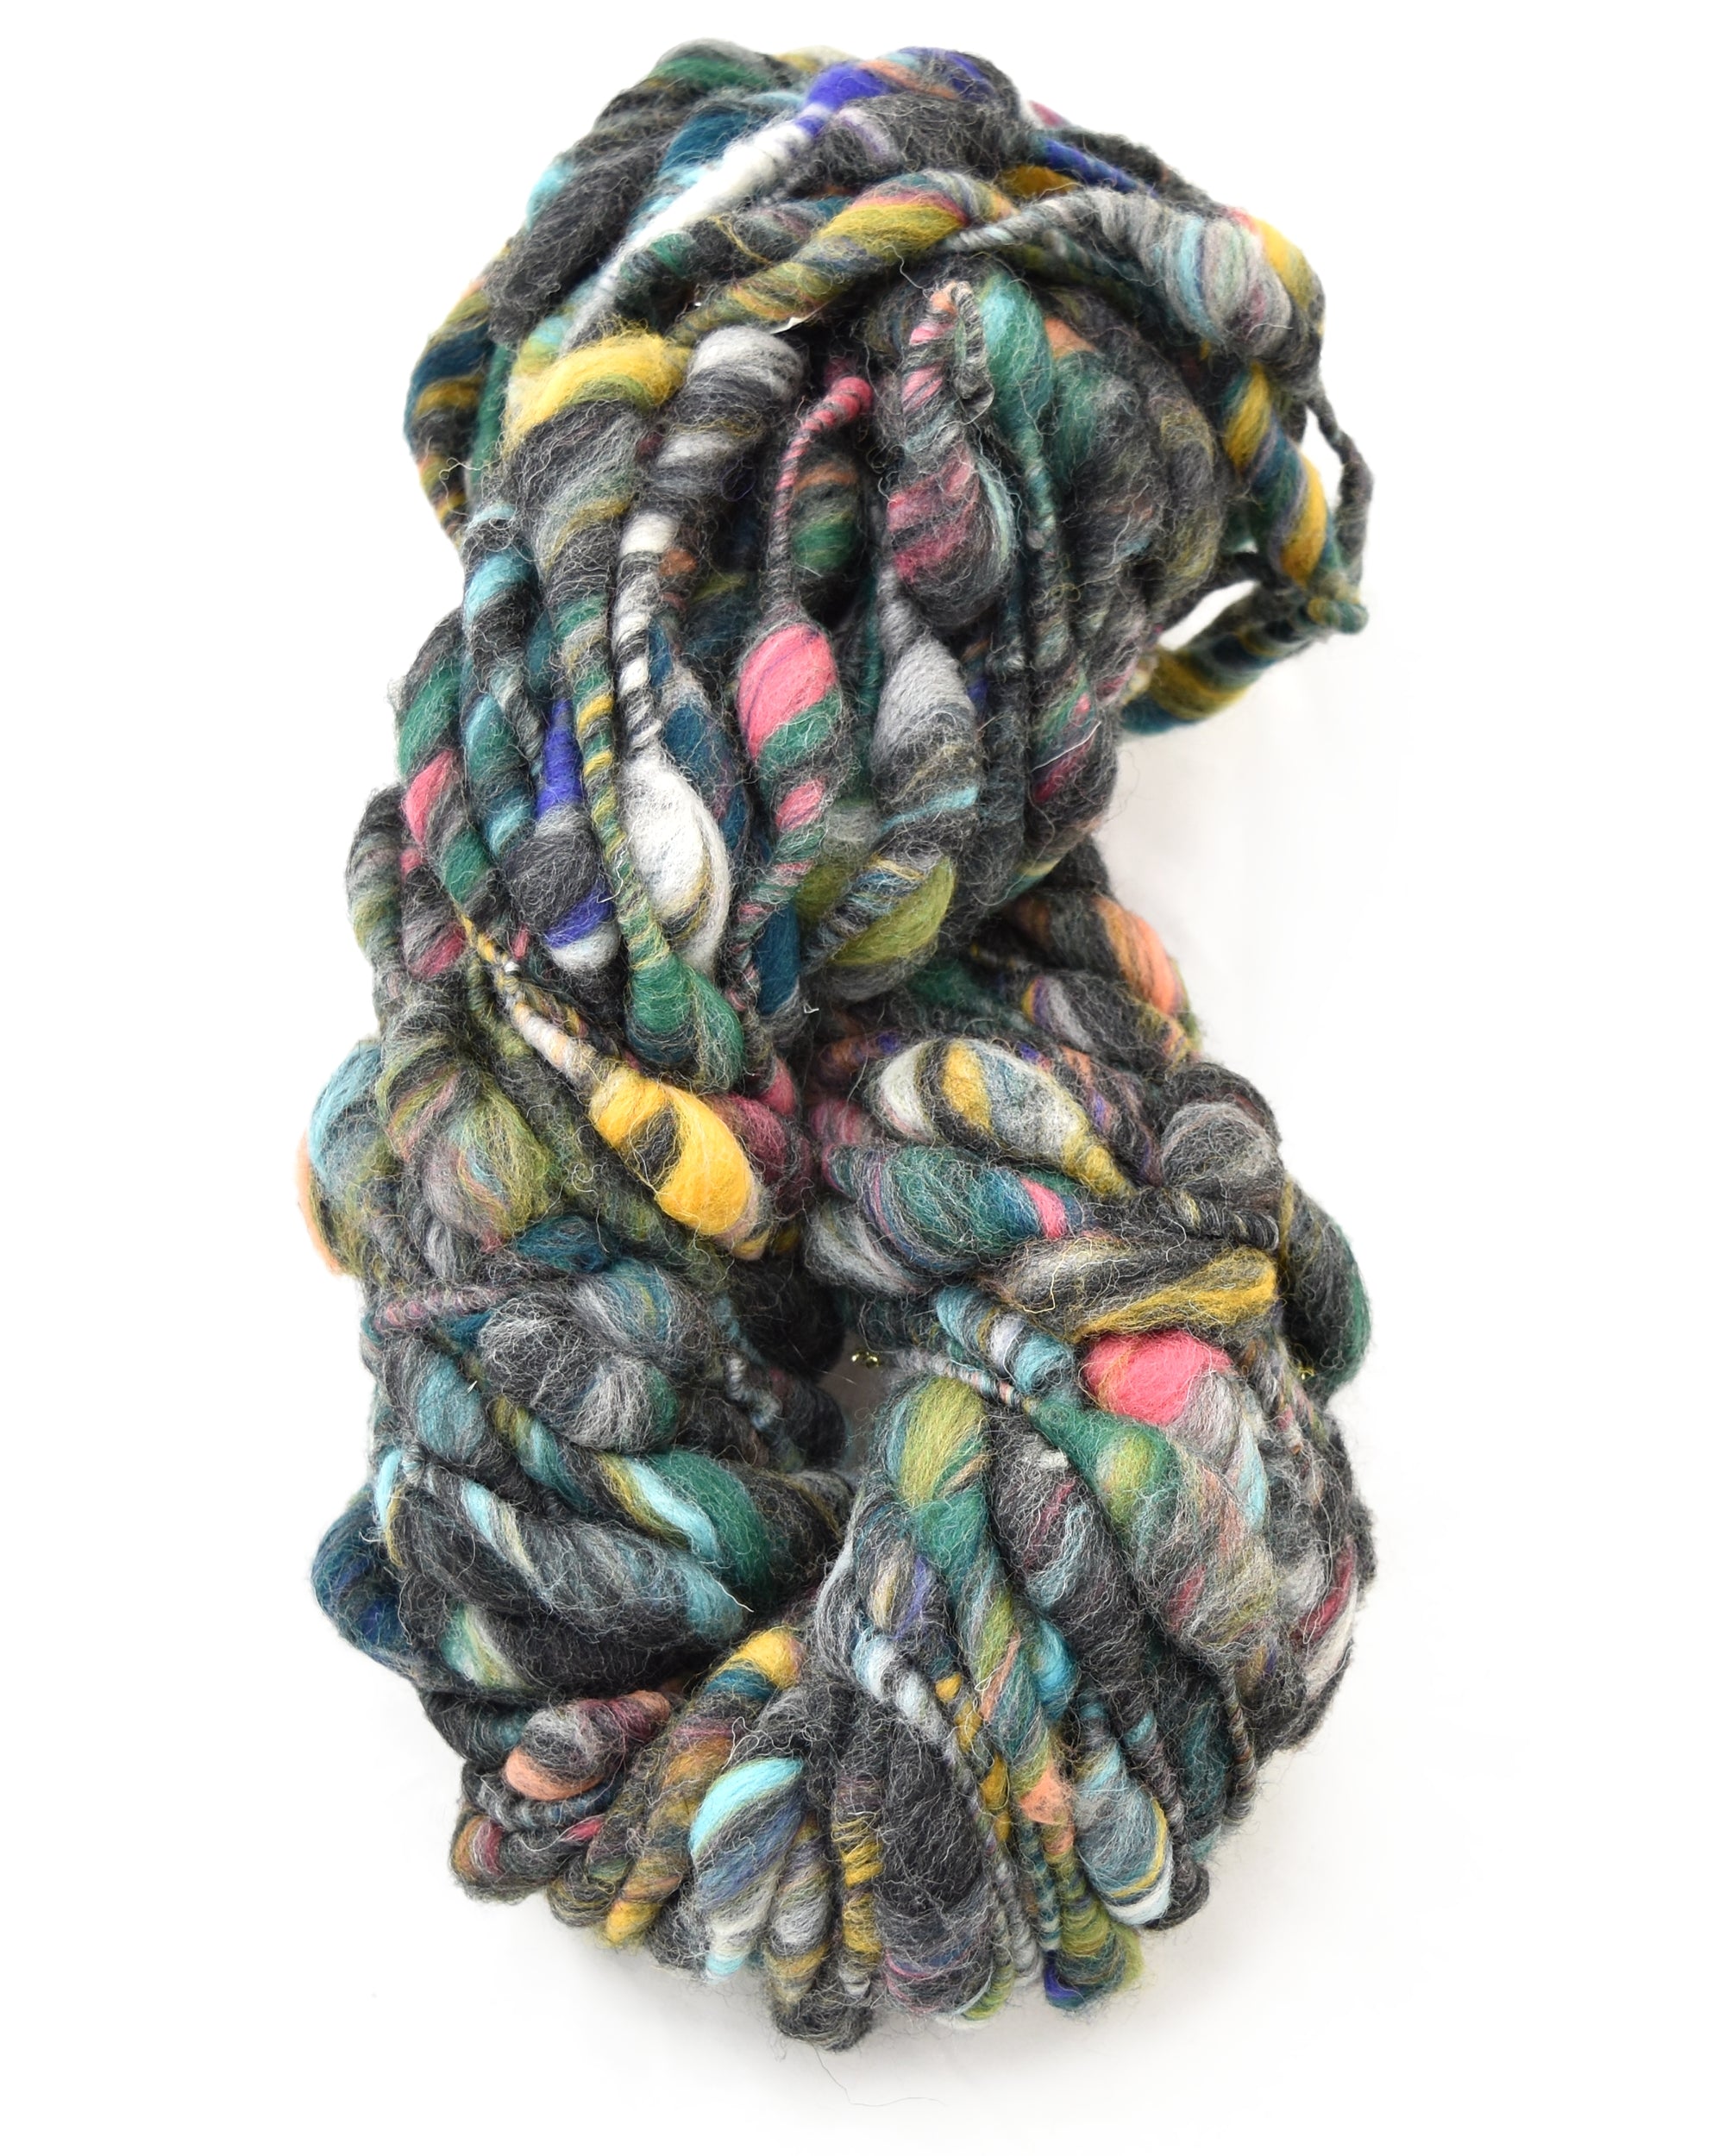 Pixie Dust Bulky Wool Yarn | Yarn Designers Boutique Pixie Dust Bumpy Yarn by Knit Collage Yarn Designers Boutique